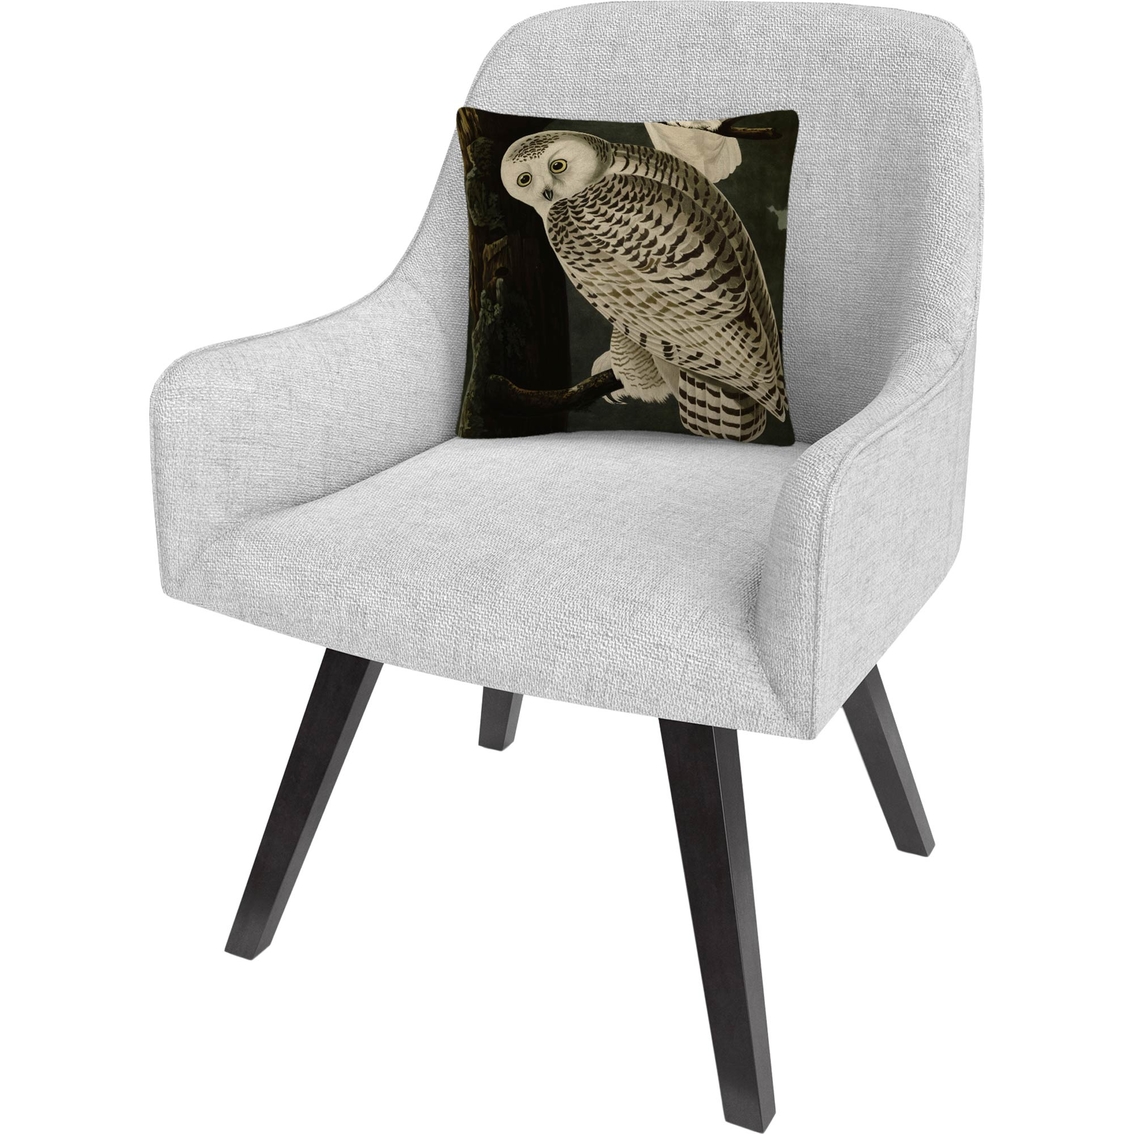 Trademark Fine Art John James Audubon Snowy Owl Decorative Throw Pillow - Image 2 of 3